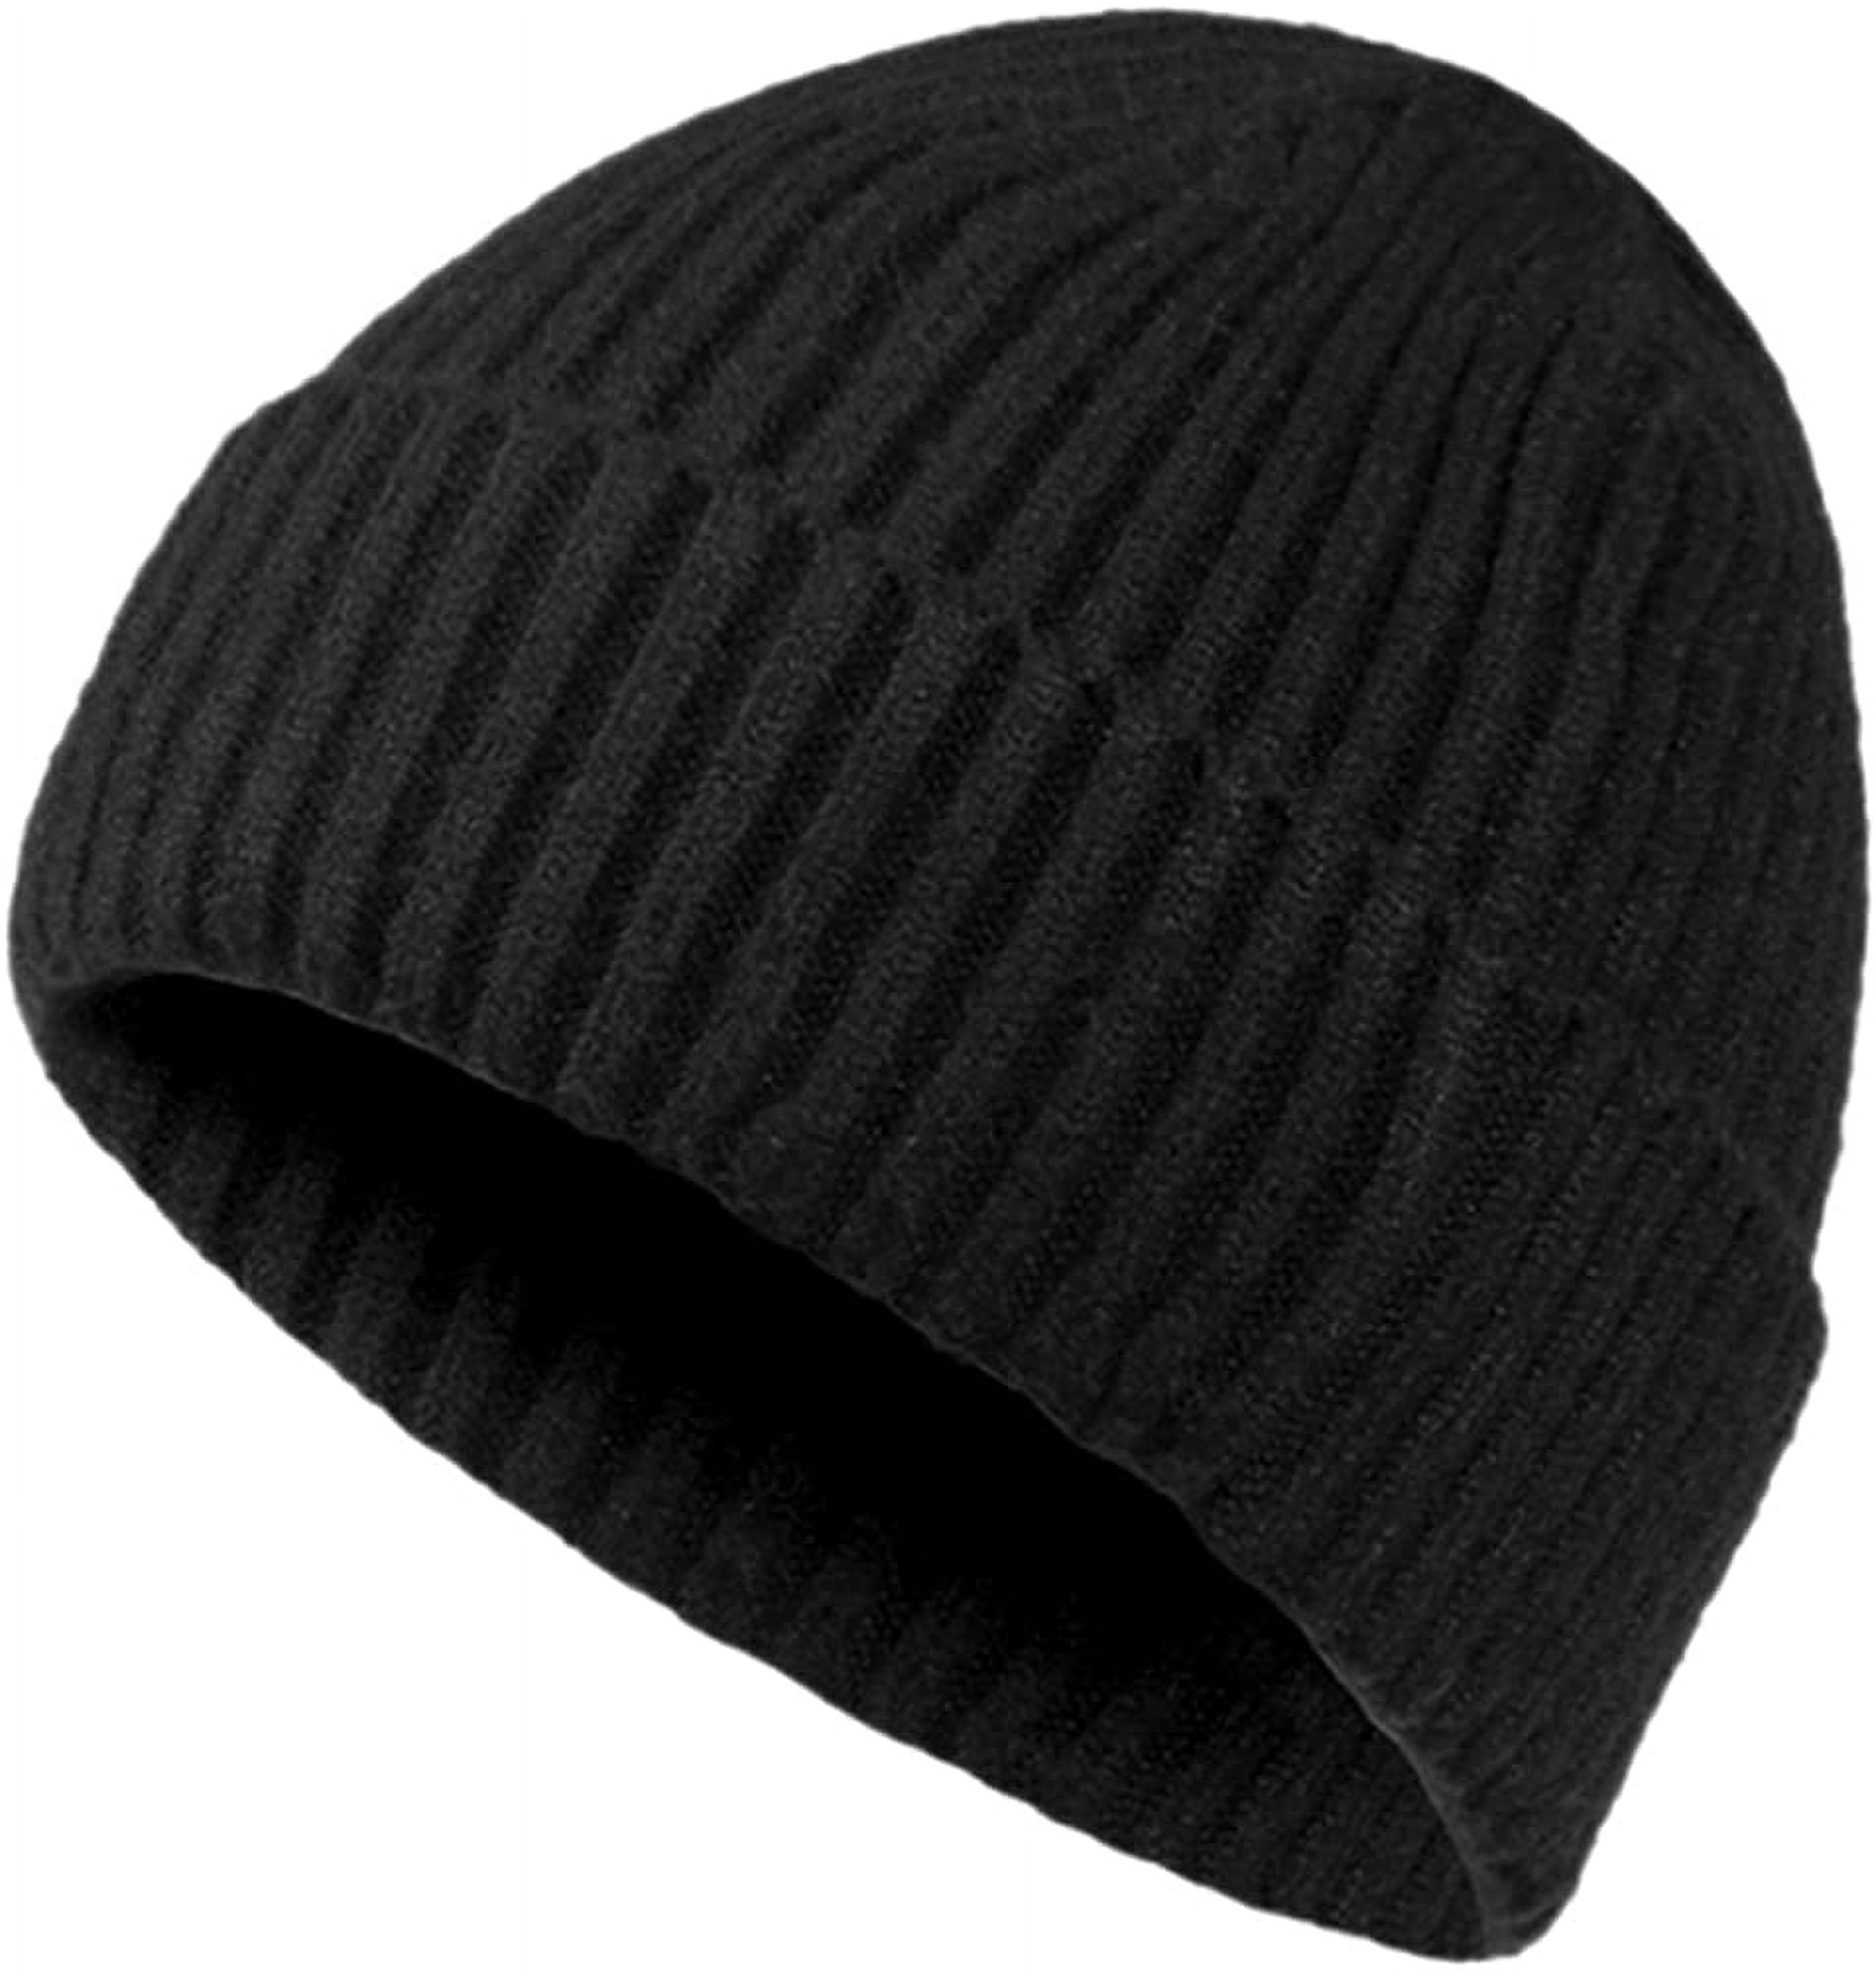 Winter Hats for Men Wool Knit Slouchy Beanie Hats Warm Baggy Skull ...